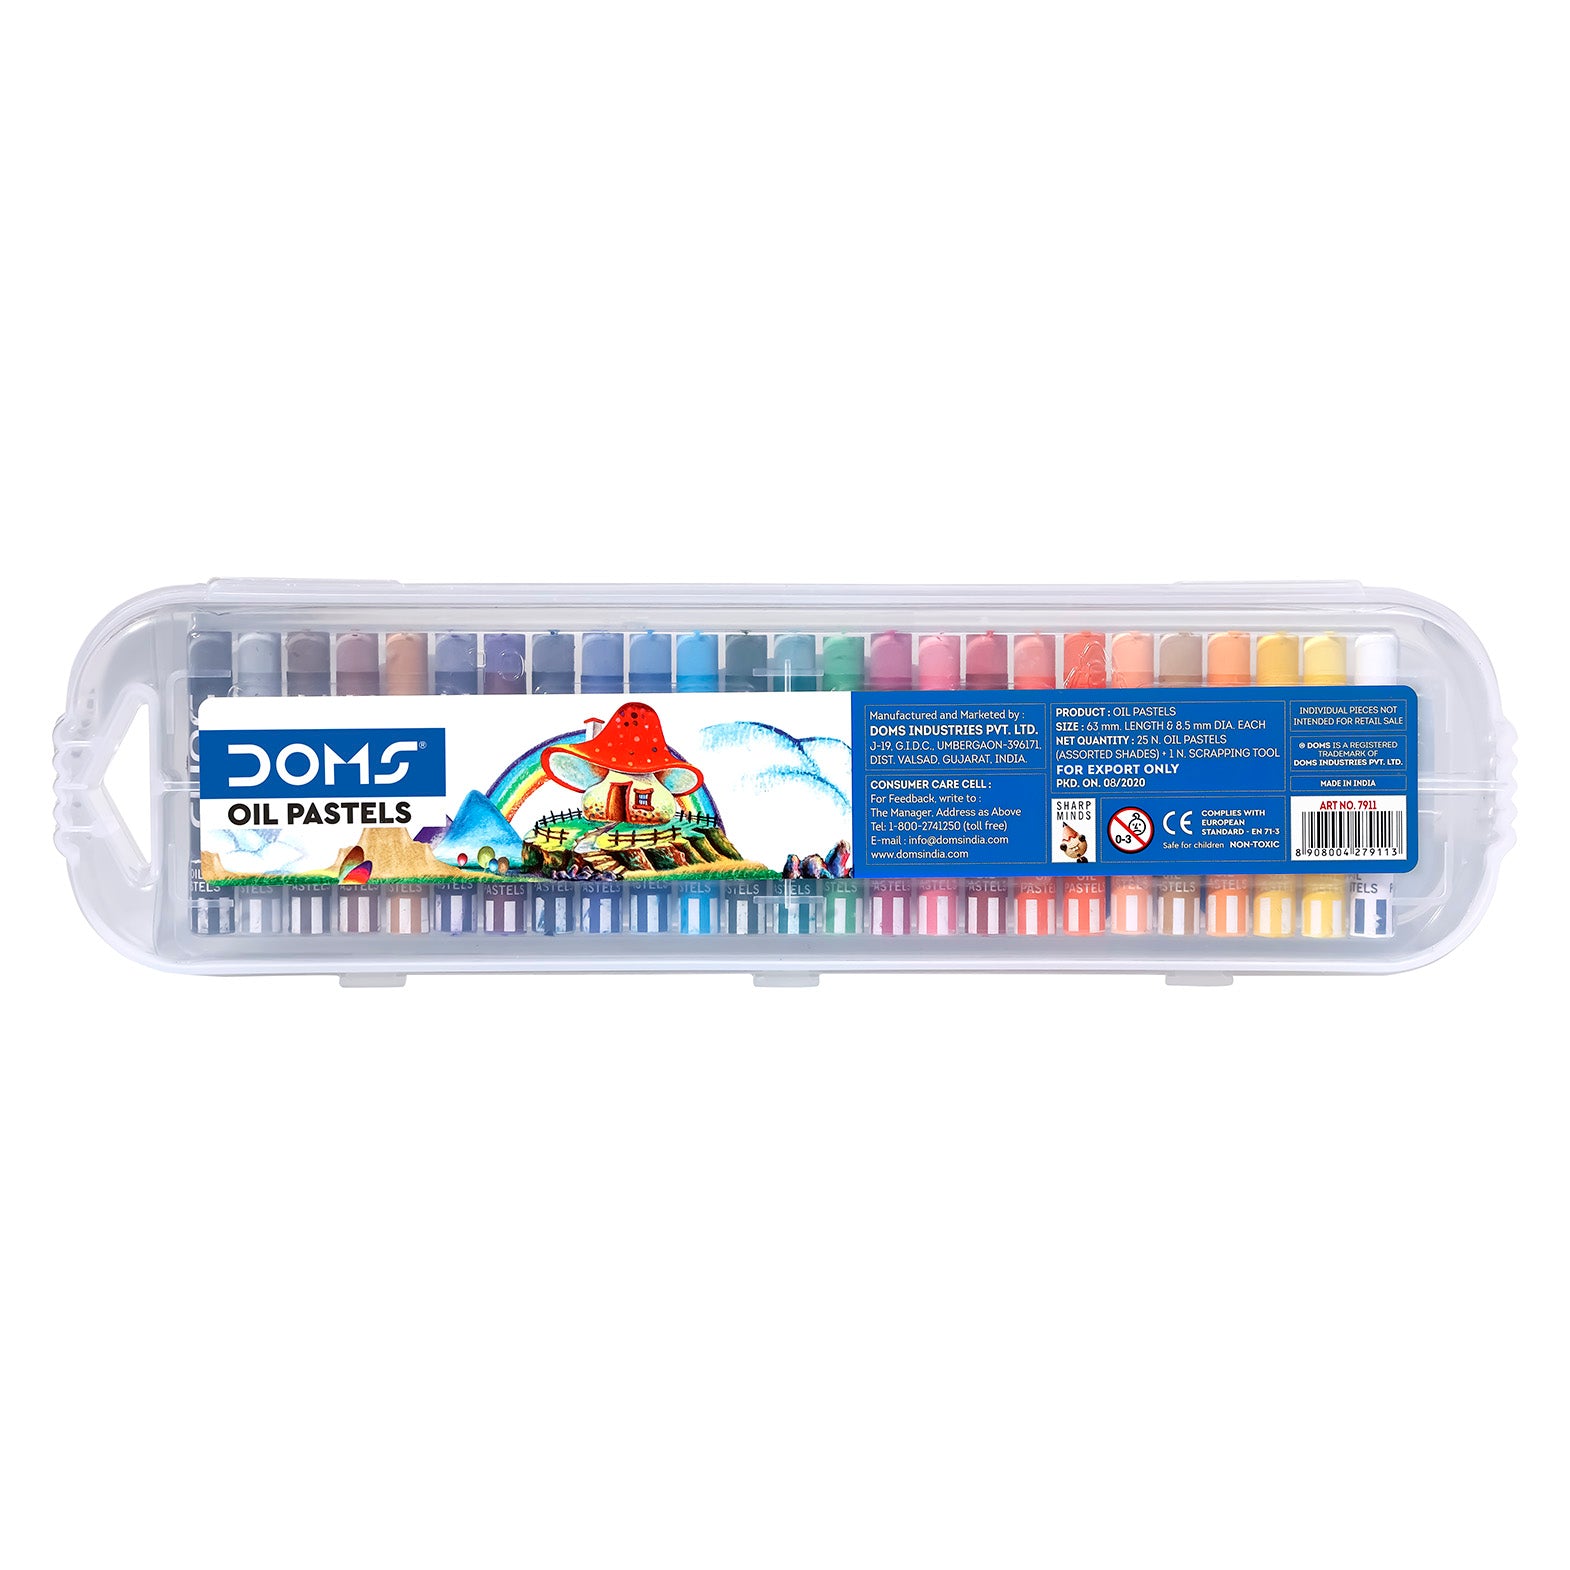 DOMS Oil Pastels Plastic Box 25 Shades